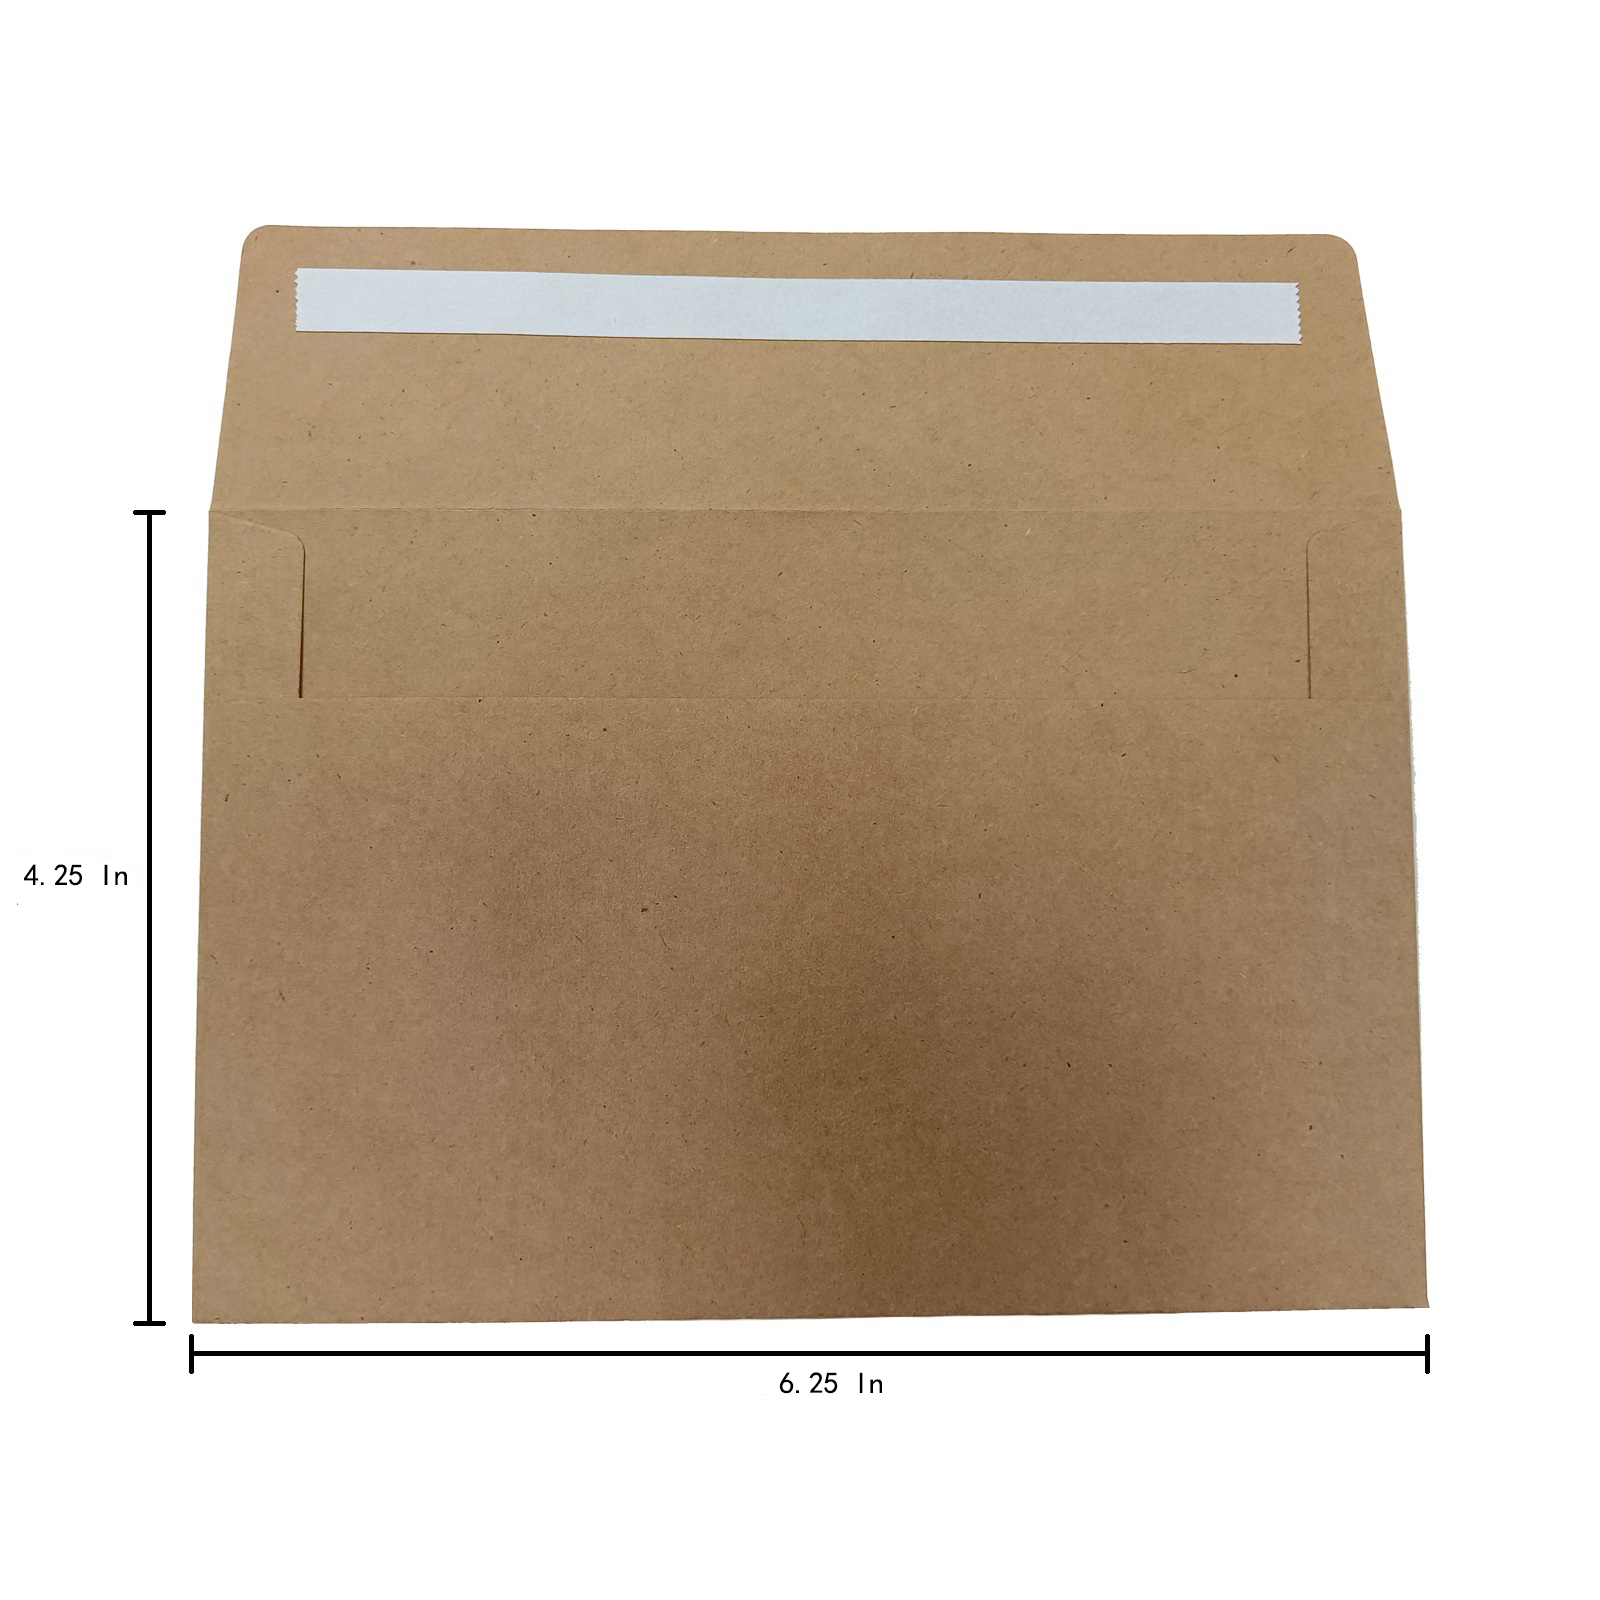 #A4 Envelopes - Quick-Seal - for 4 x 6 Photos - Invitations